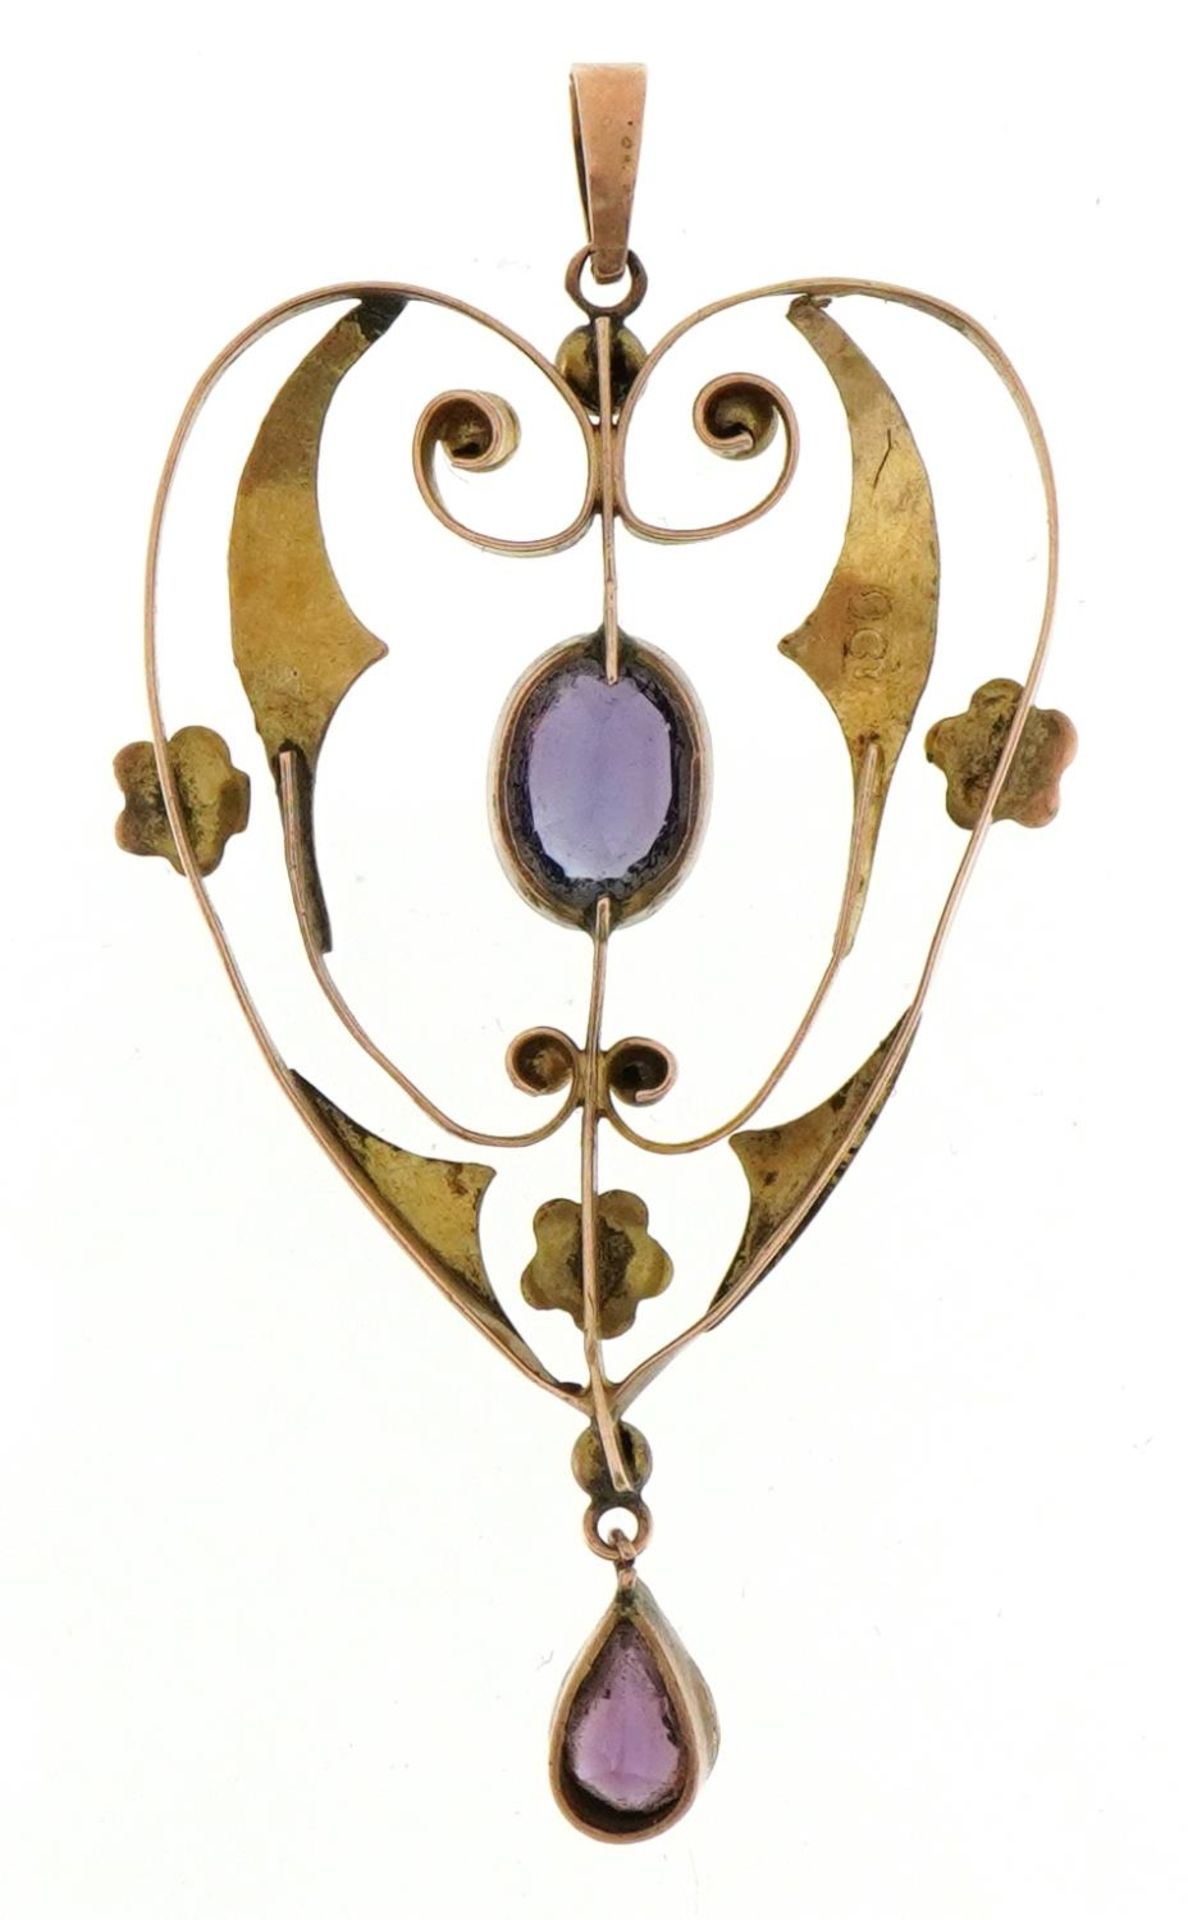 Edwardian 9ct rose gold amethyst drop pendant, 4.8cm high, 2.4g - Image 2 of 3